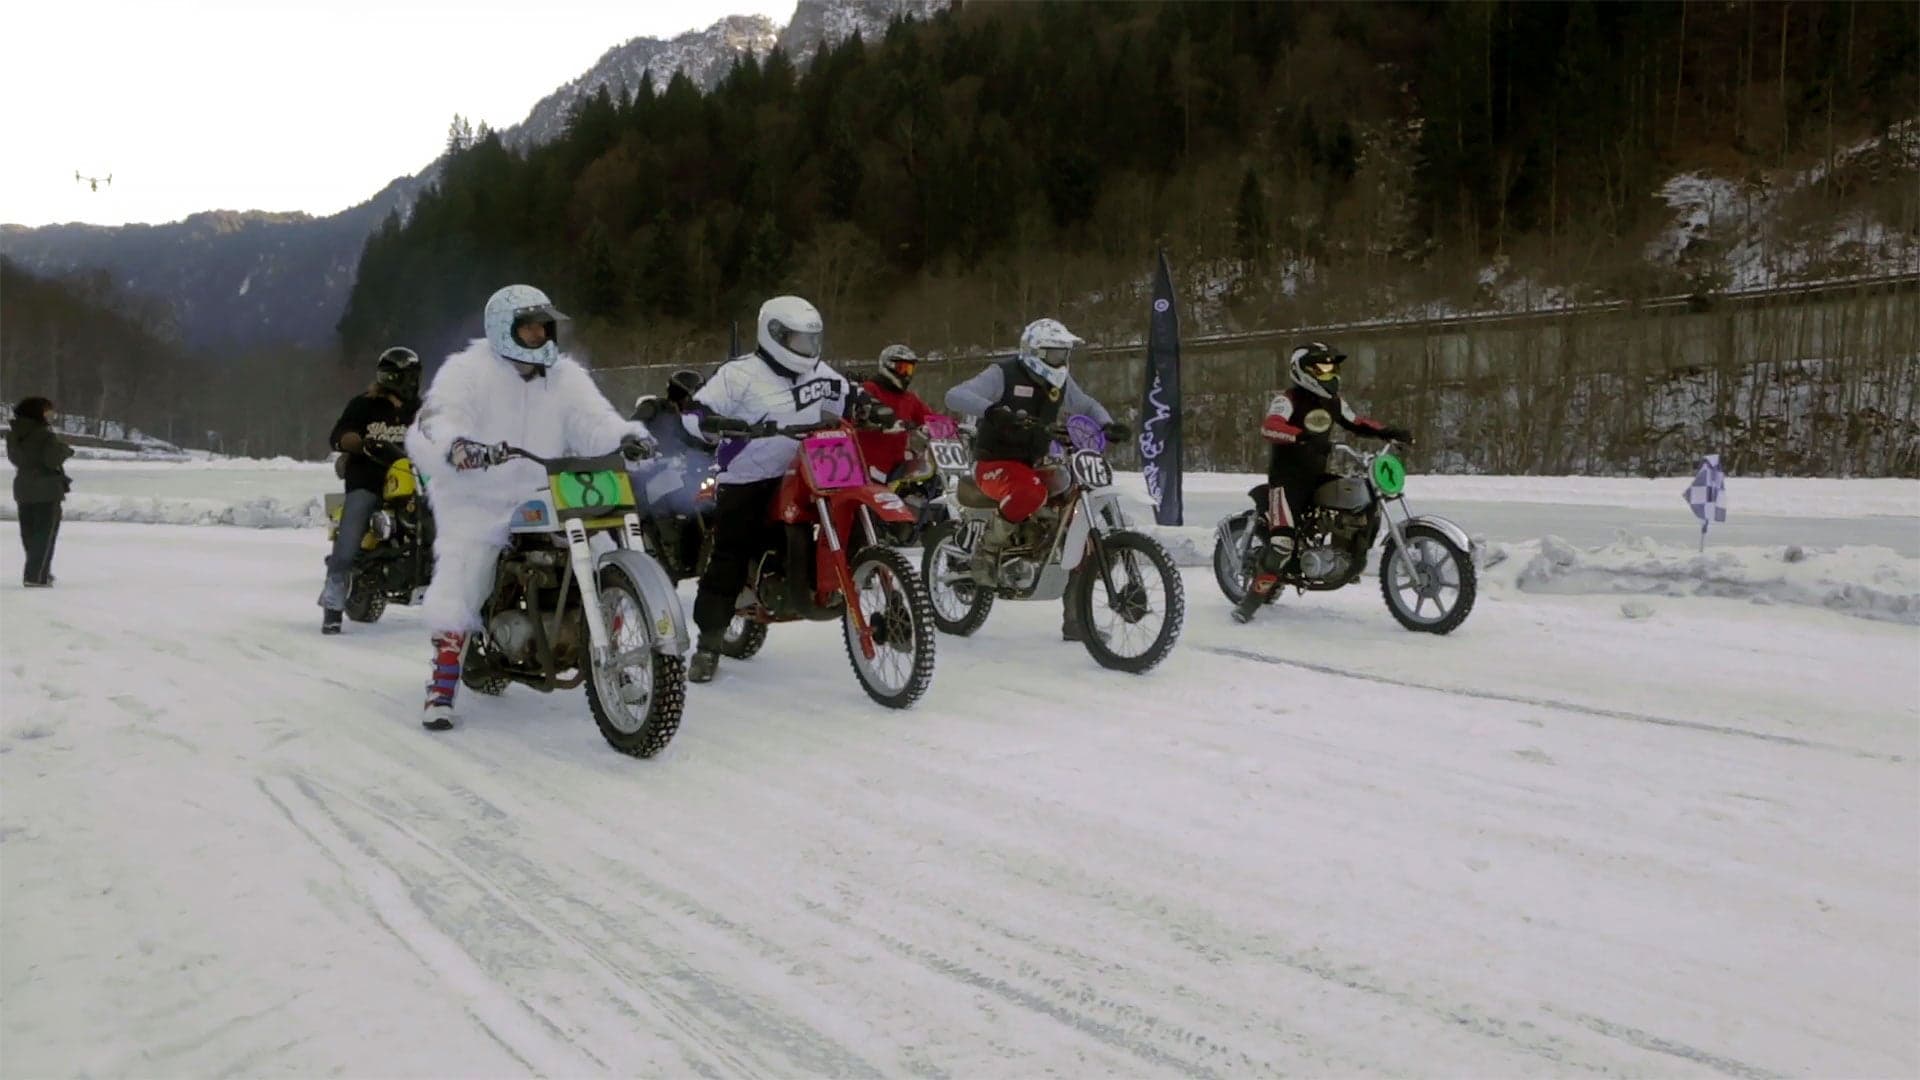 Check Out This Ice Road Racing Moto Bonanza